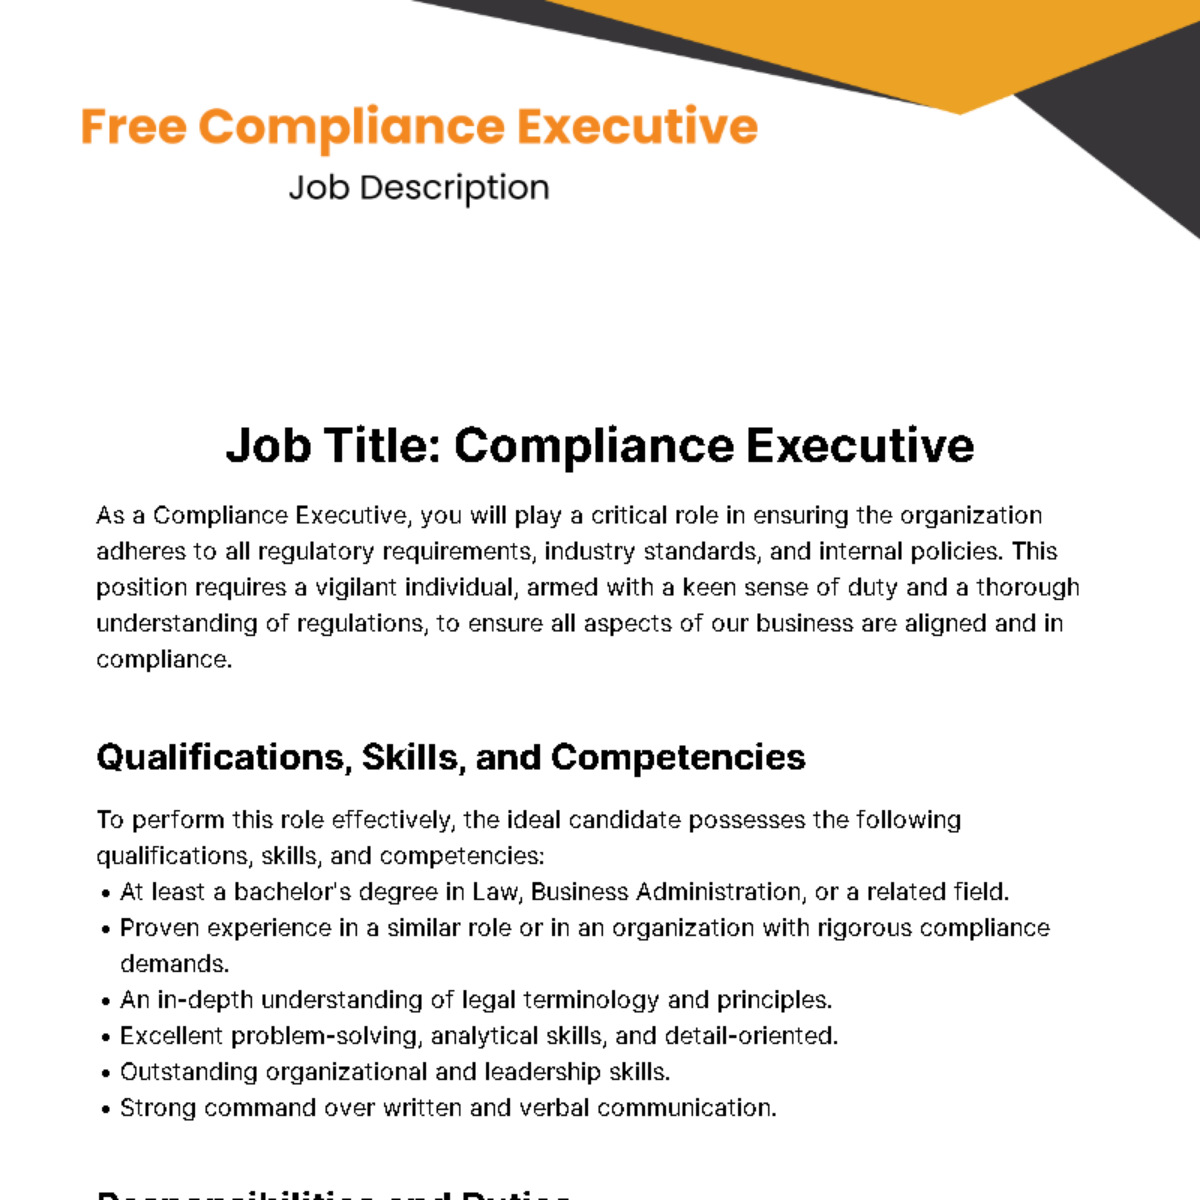 Free Compliance Executive Job Description Template